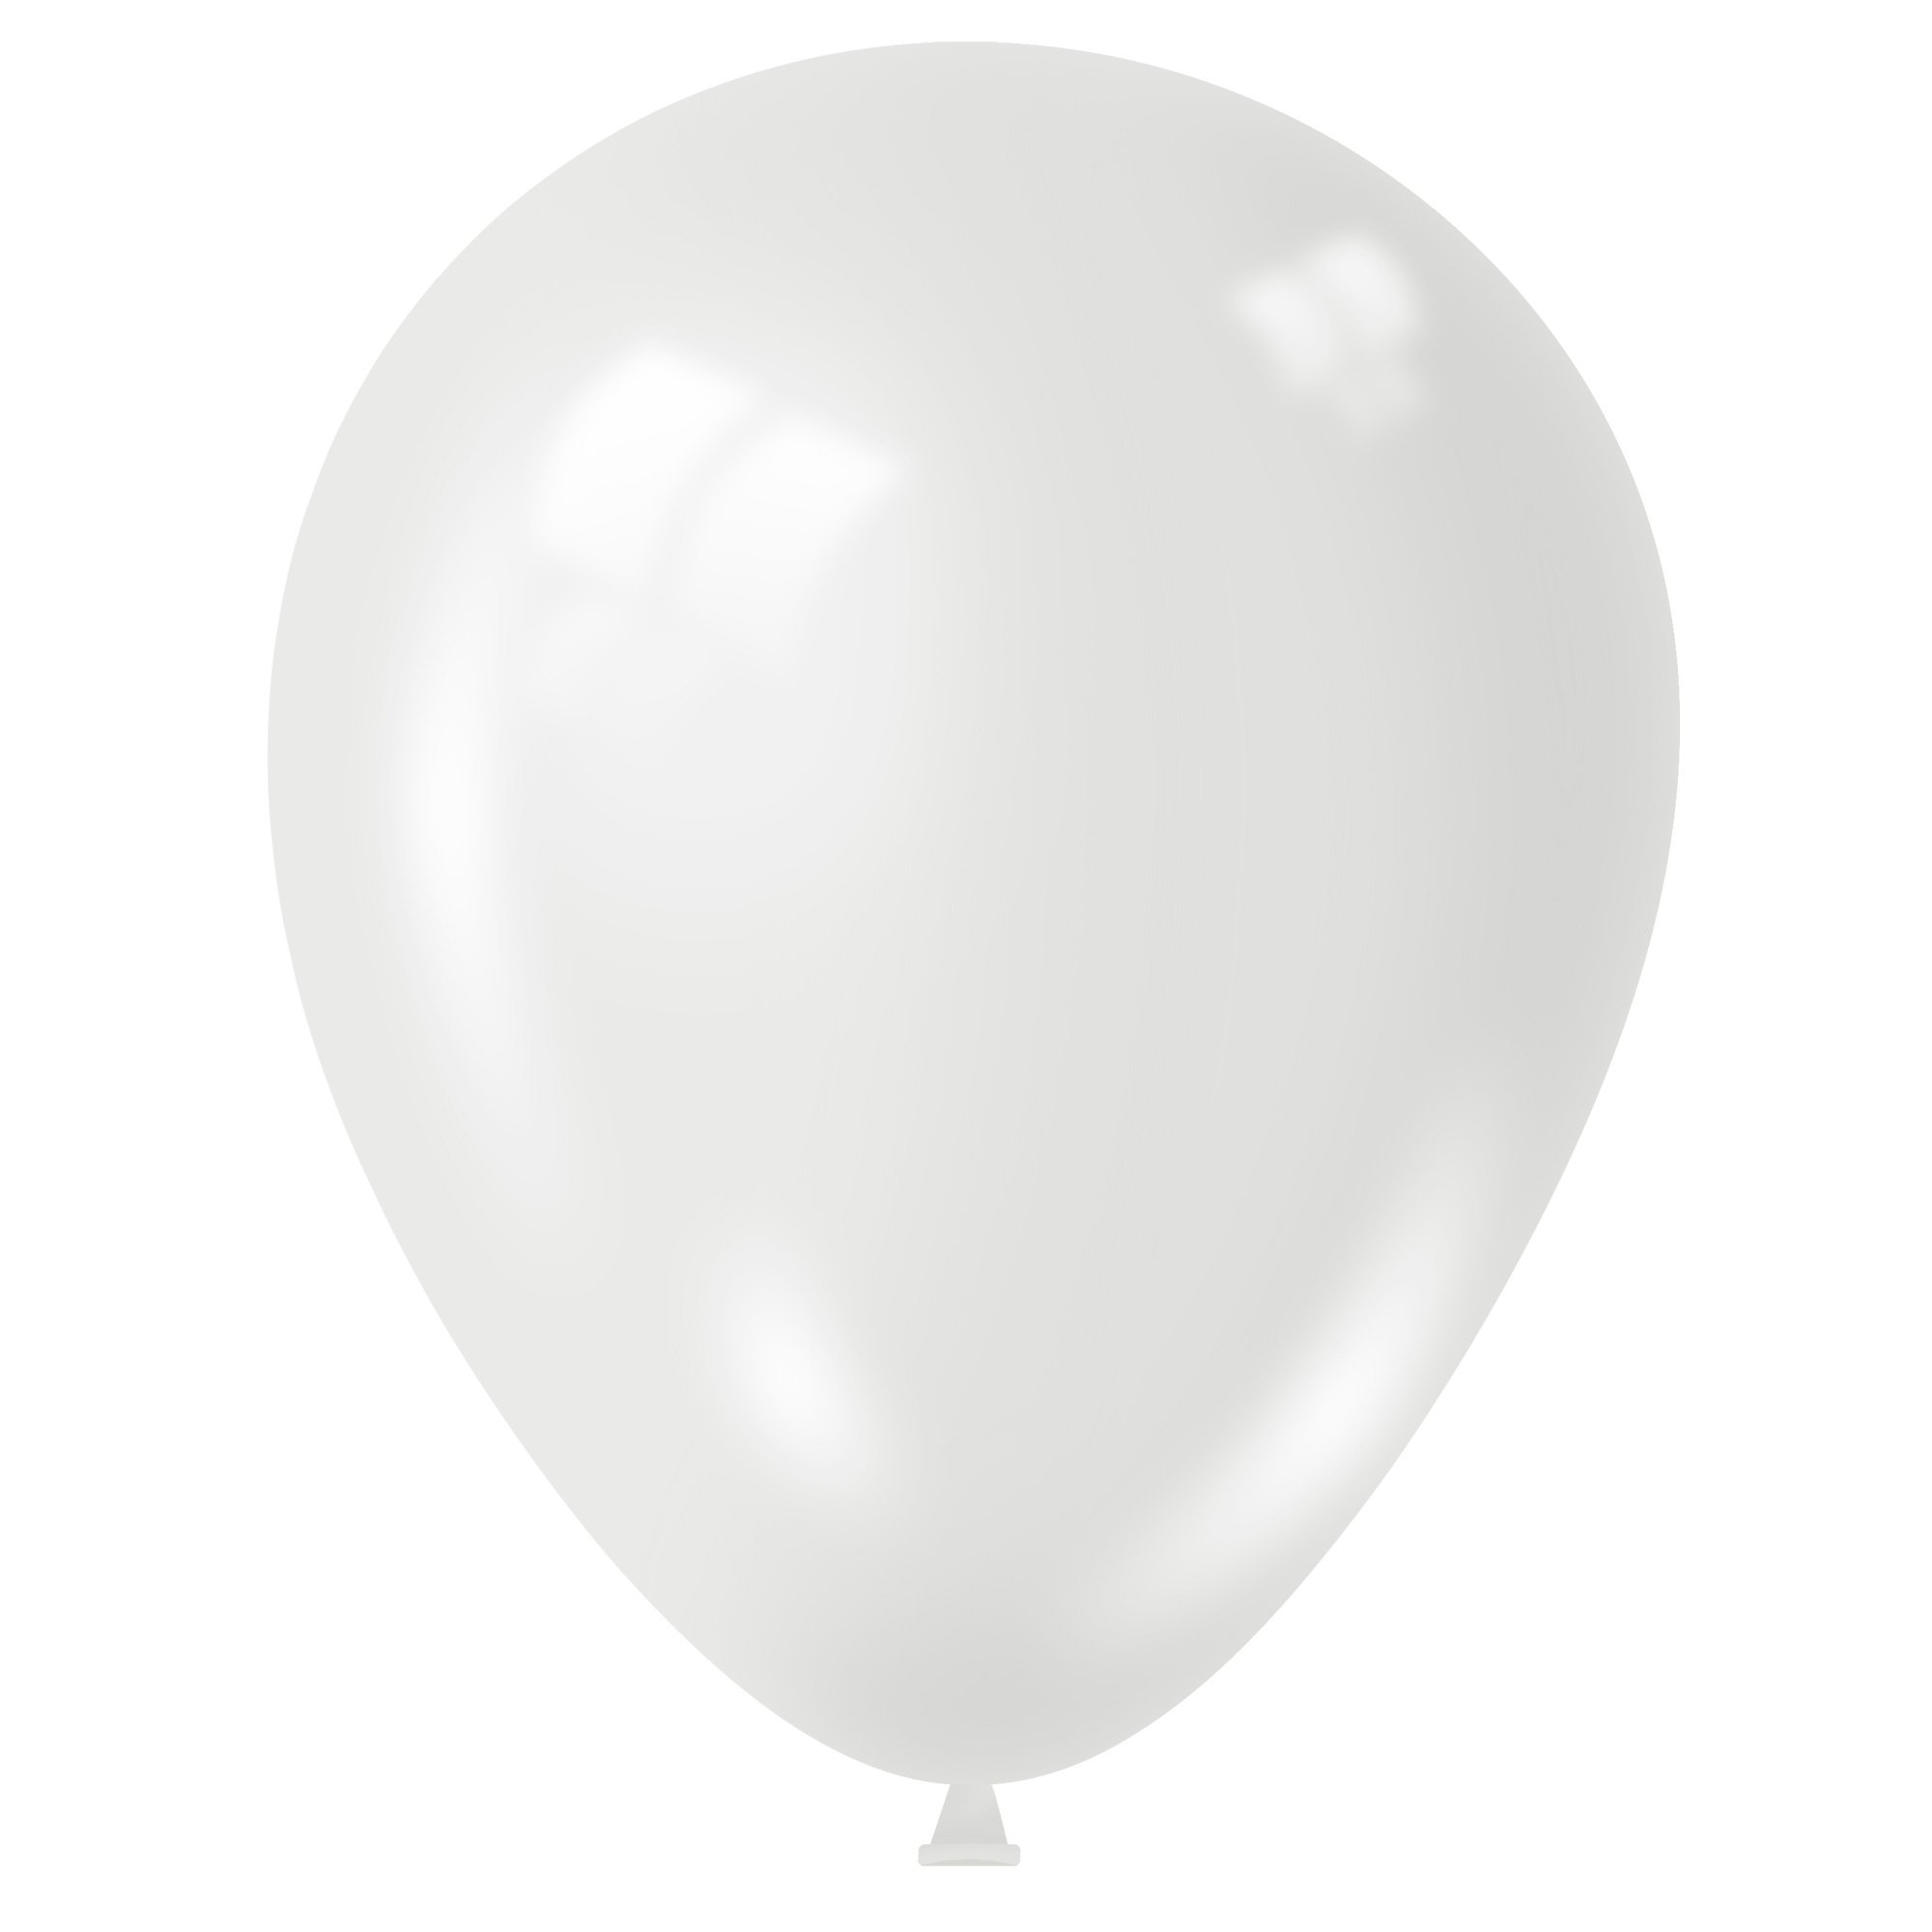 White Latex Balloons - Pack Of 50